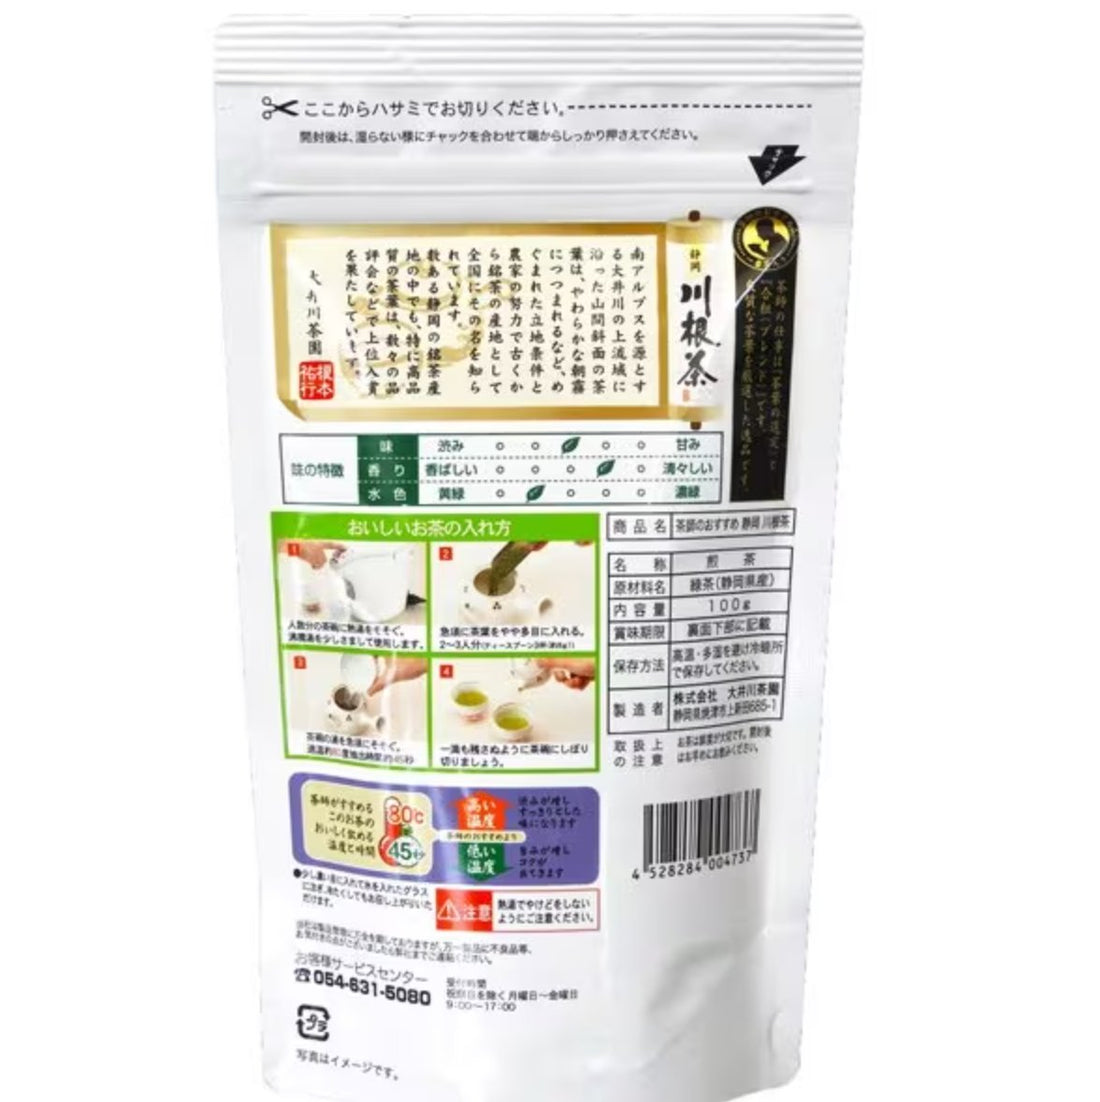 Oigawa Tea Garden Recommended by Tea Master Kawane Tea 100g - NihonMura